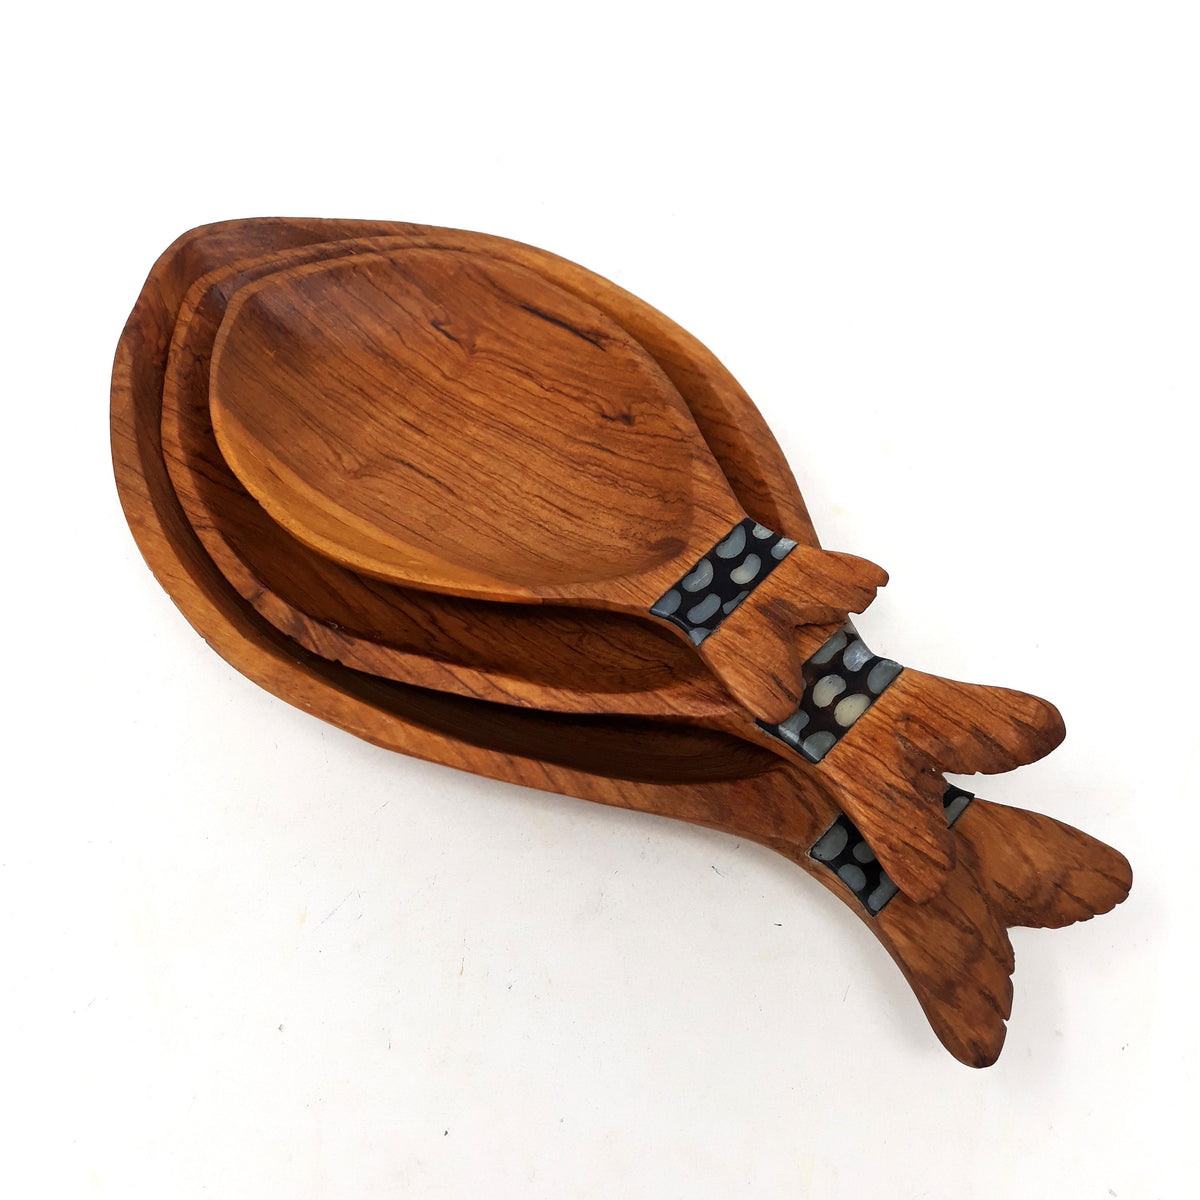 Set of 3 wooden bowls, Handmade wooden bowl, Decorative rustic bowl, Farmhouse wood bowl, wooden snack bowls, set of wood bowls, Olivewood